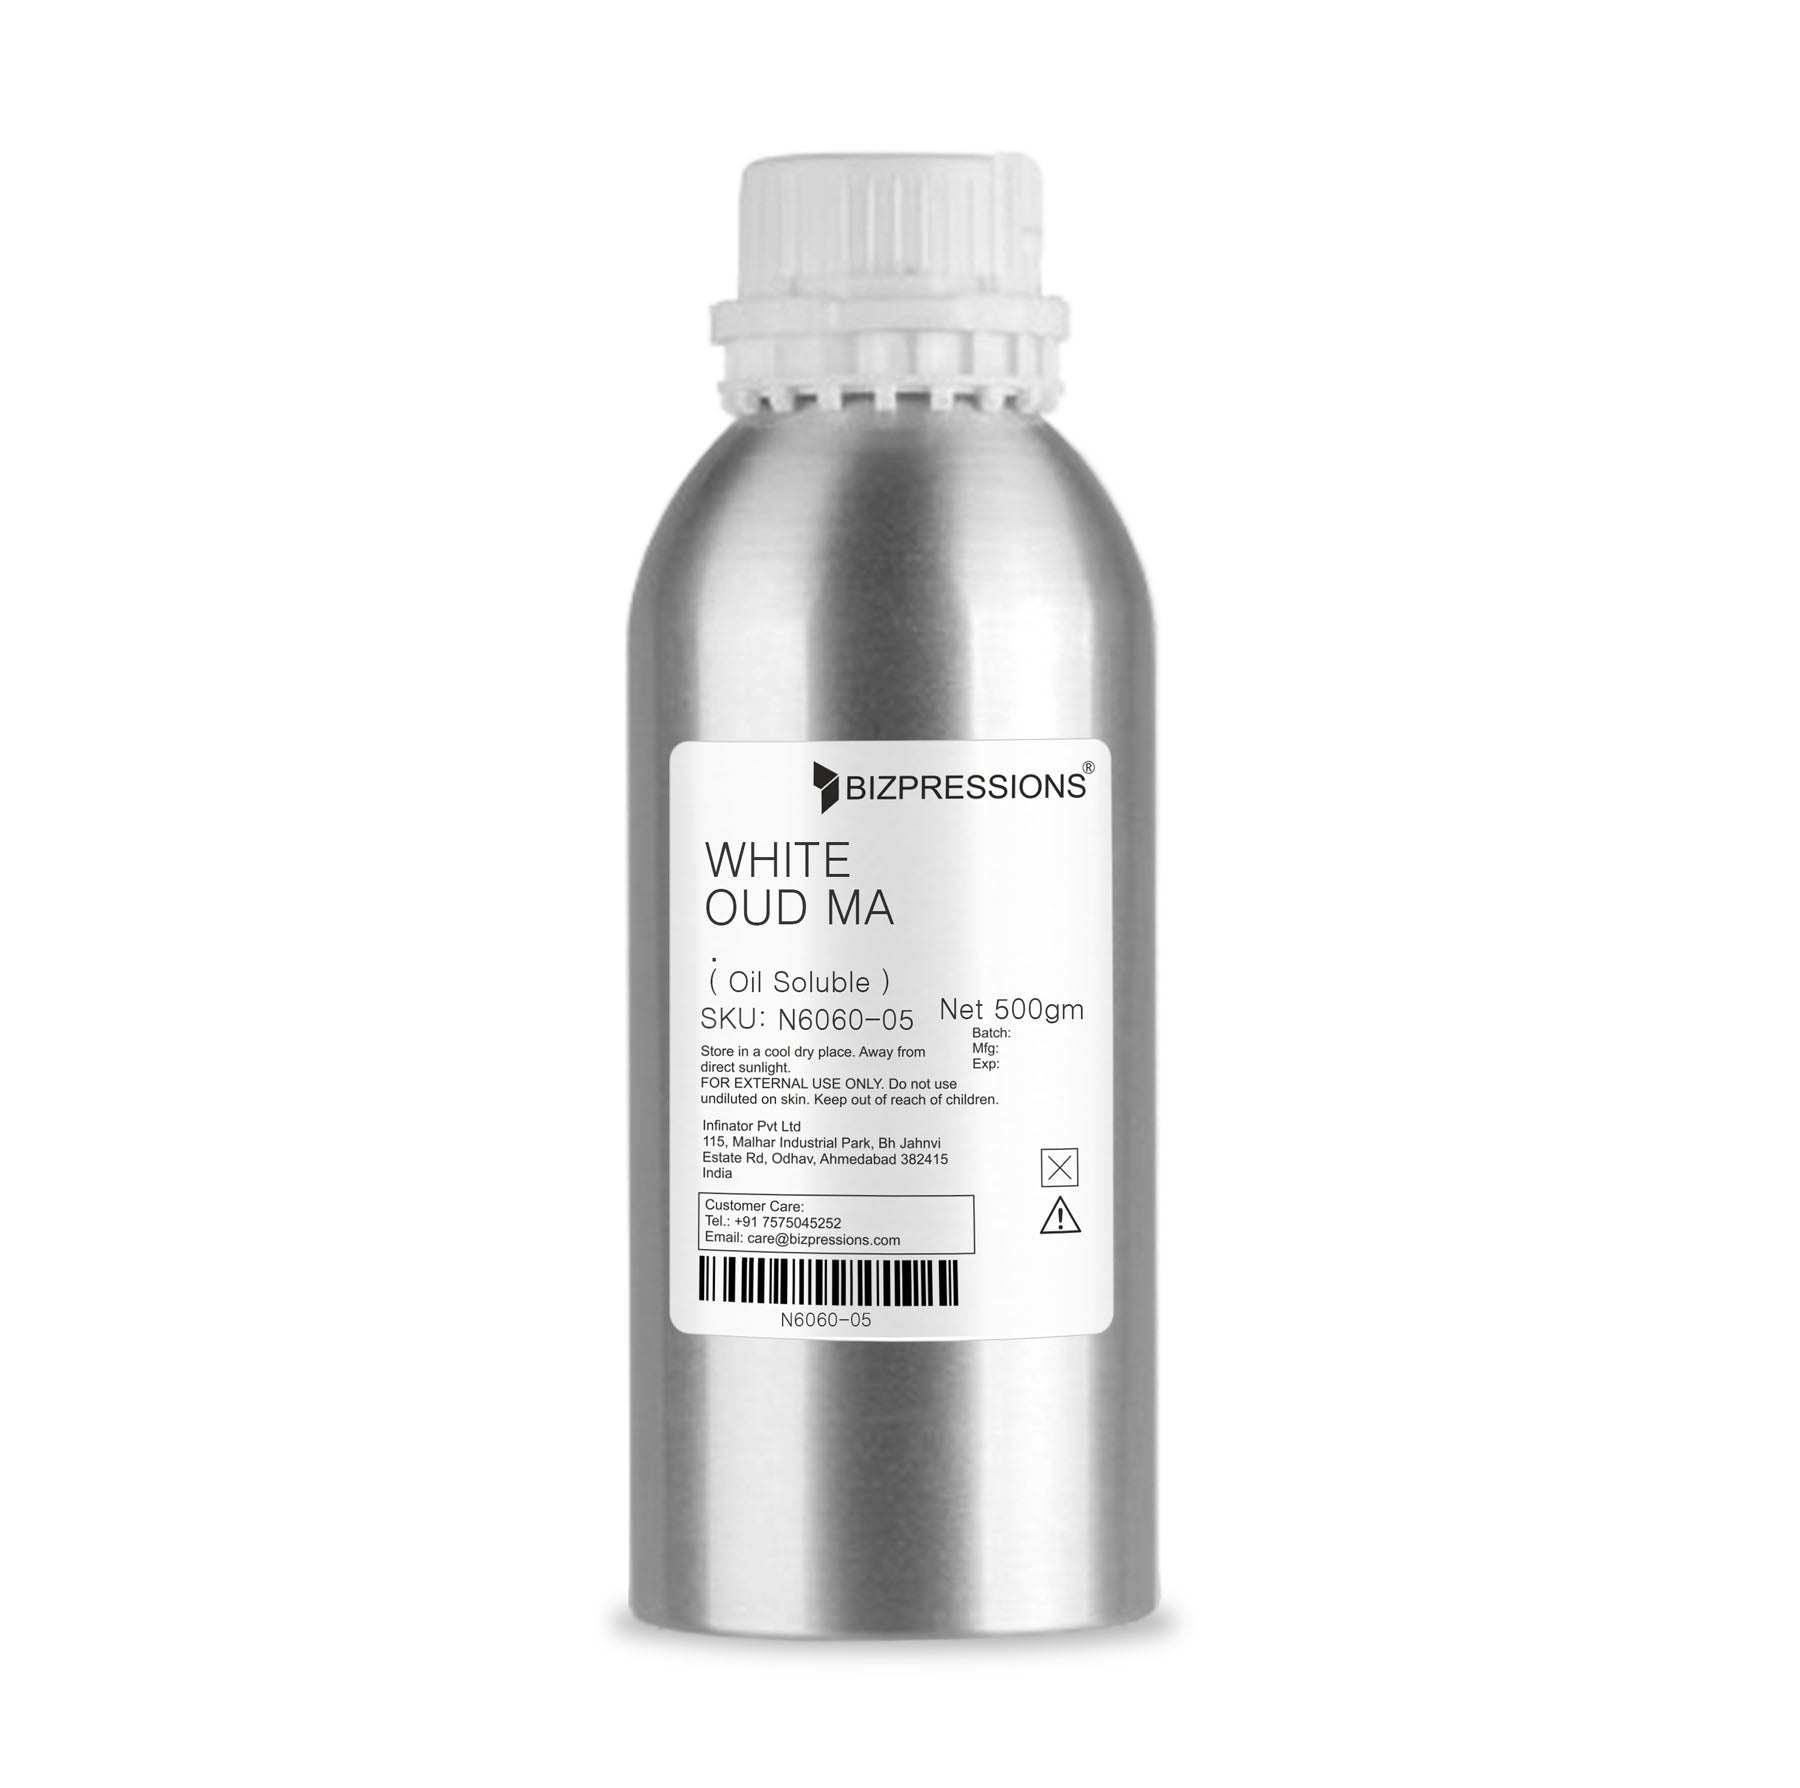 WHITE OUD MA - Fragrance ( Oil Soluble ) - 500 gm